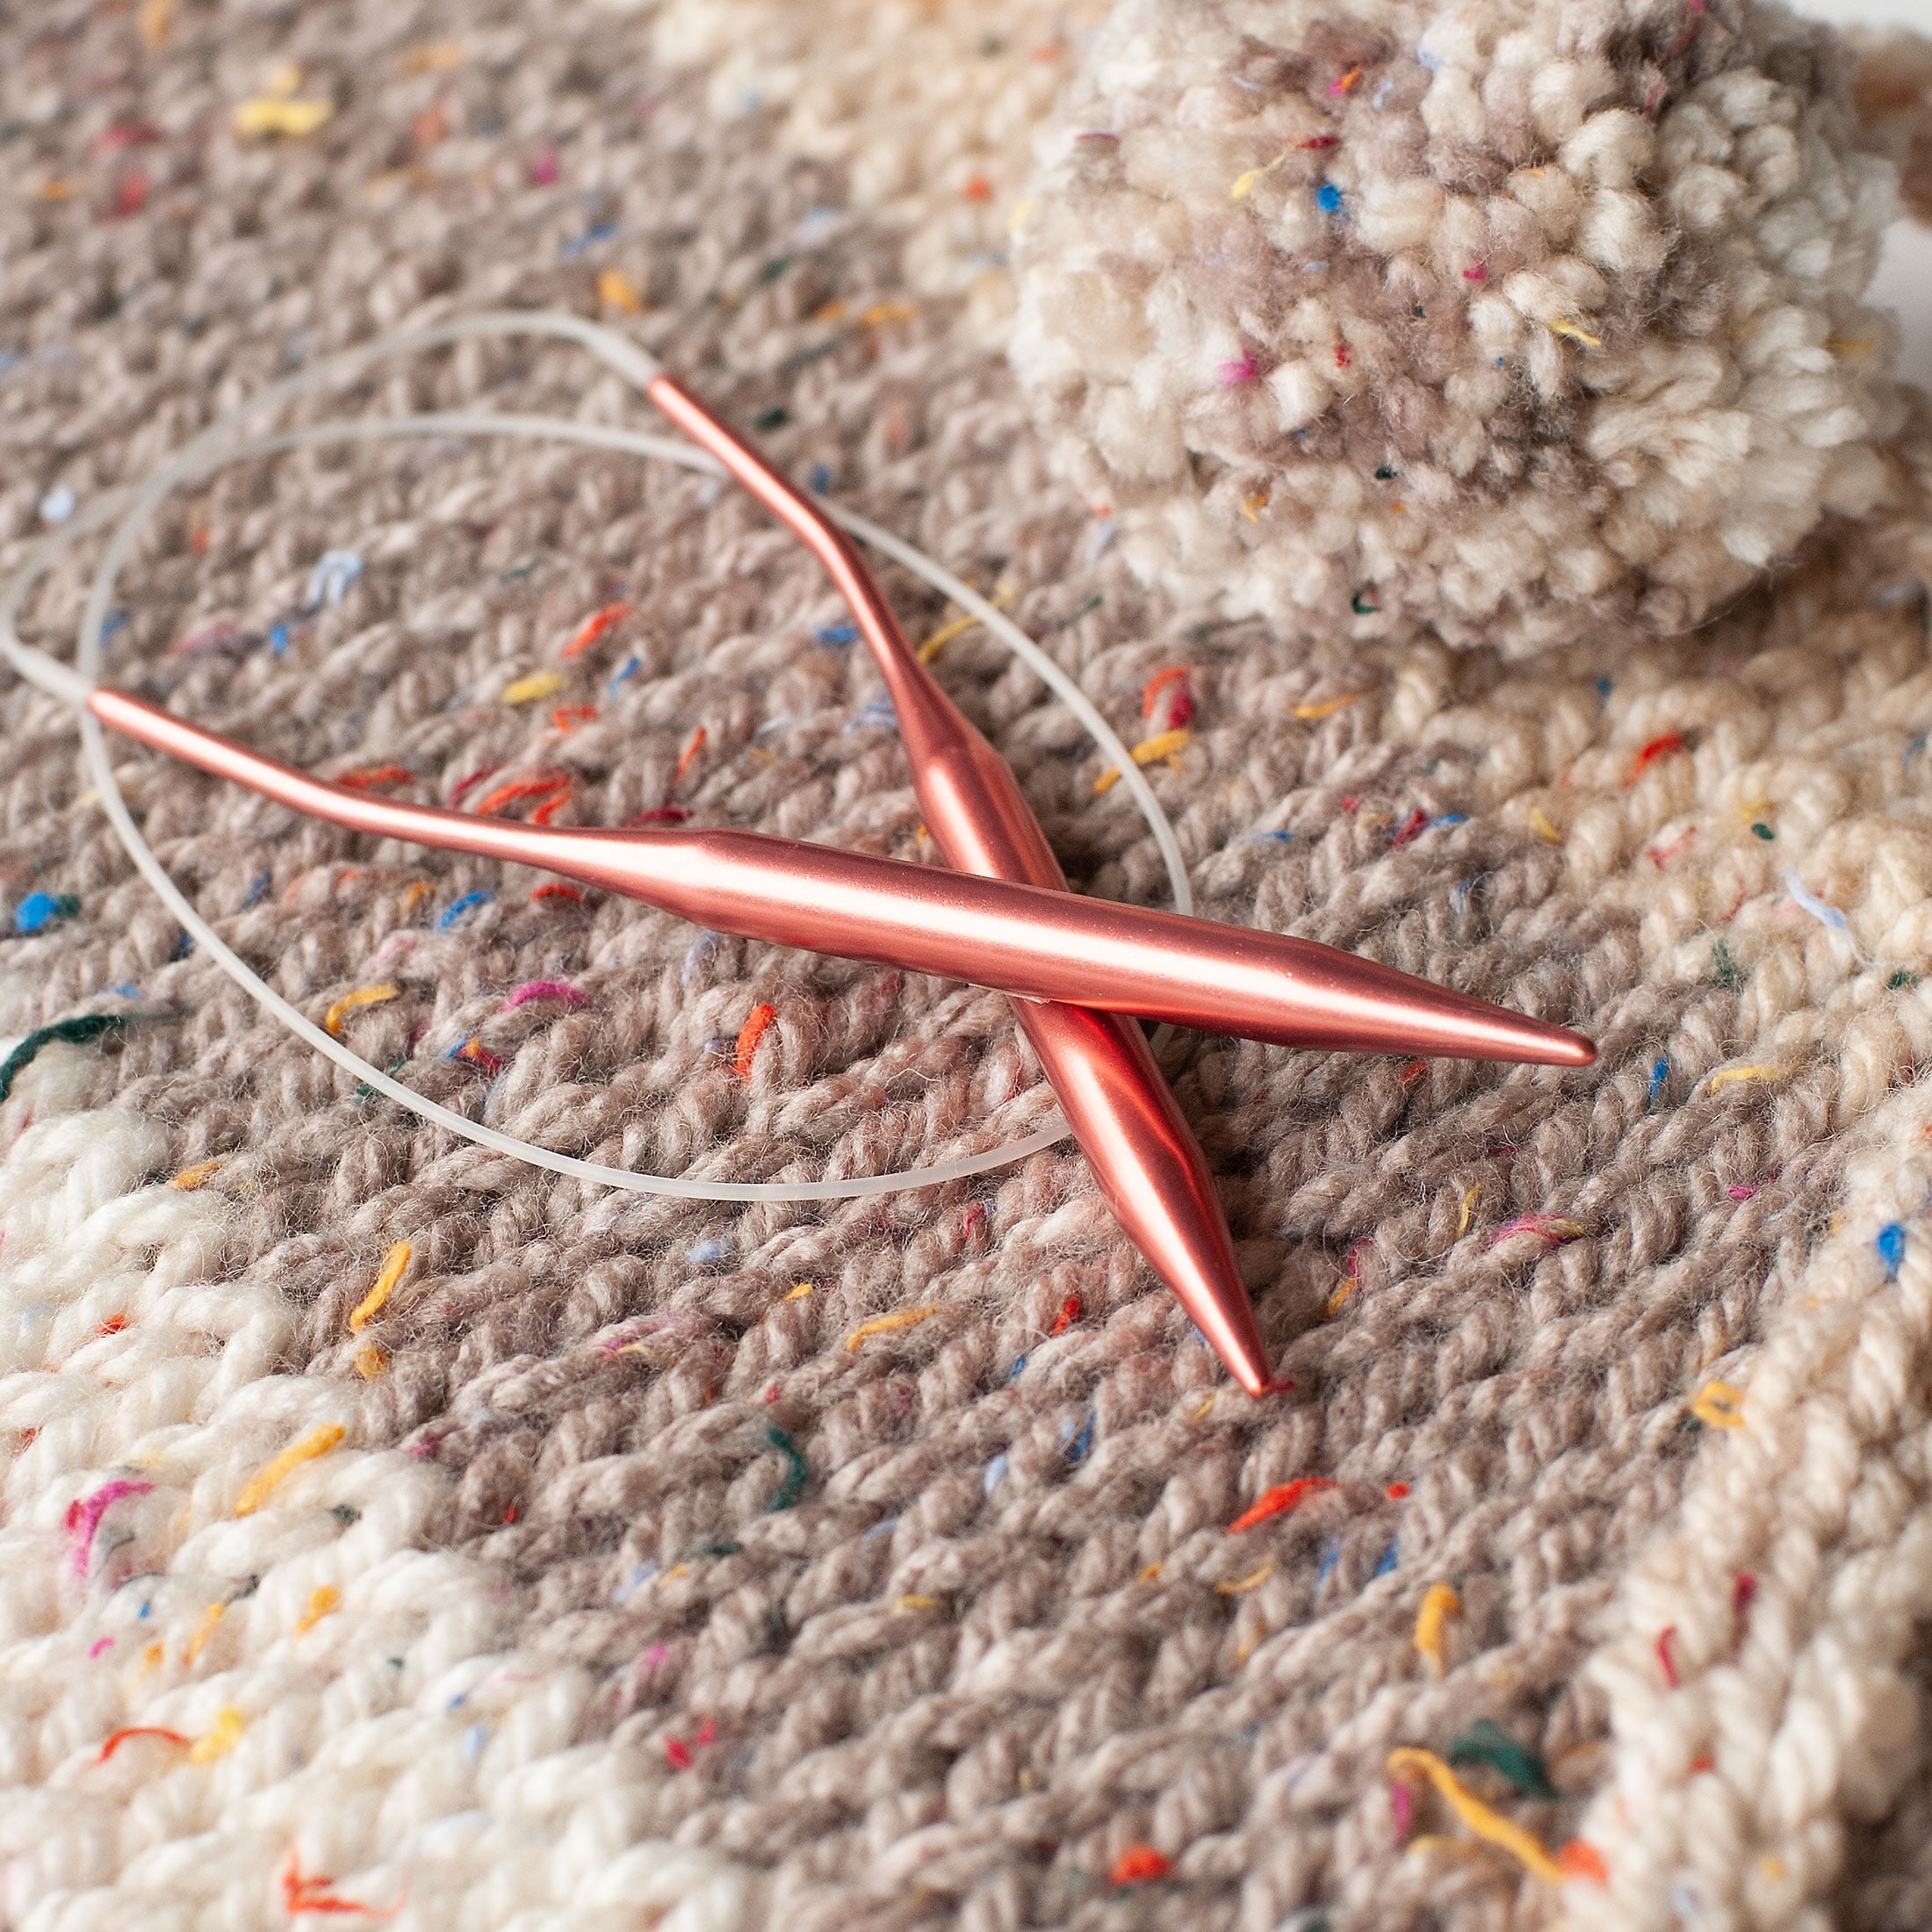 Boye 29-inch Aluminum Circular Knitting Needles, Size 9